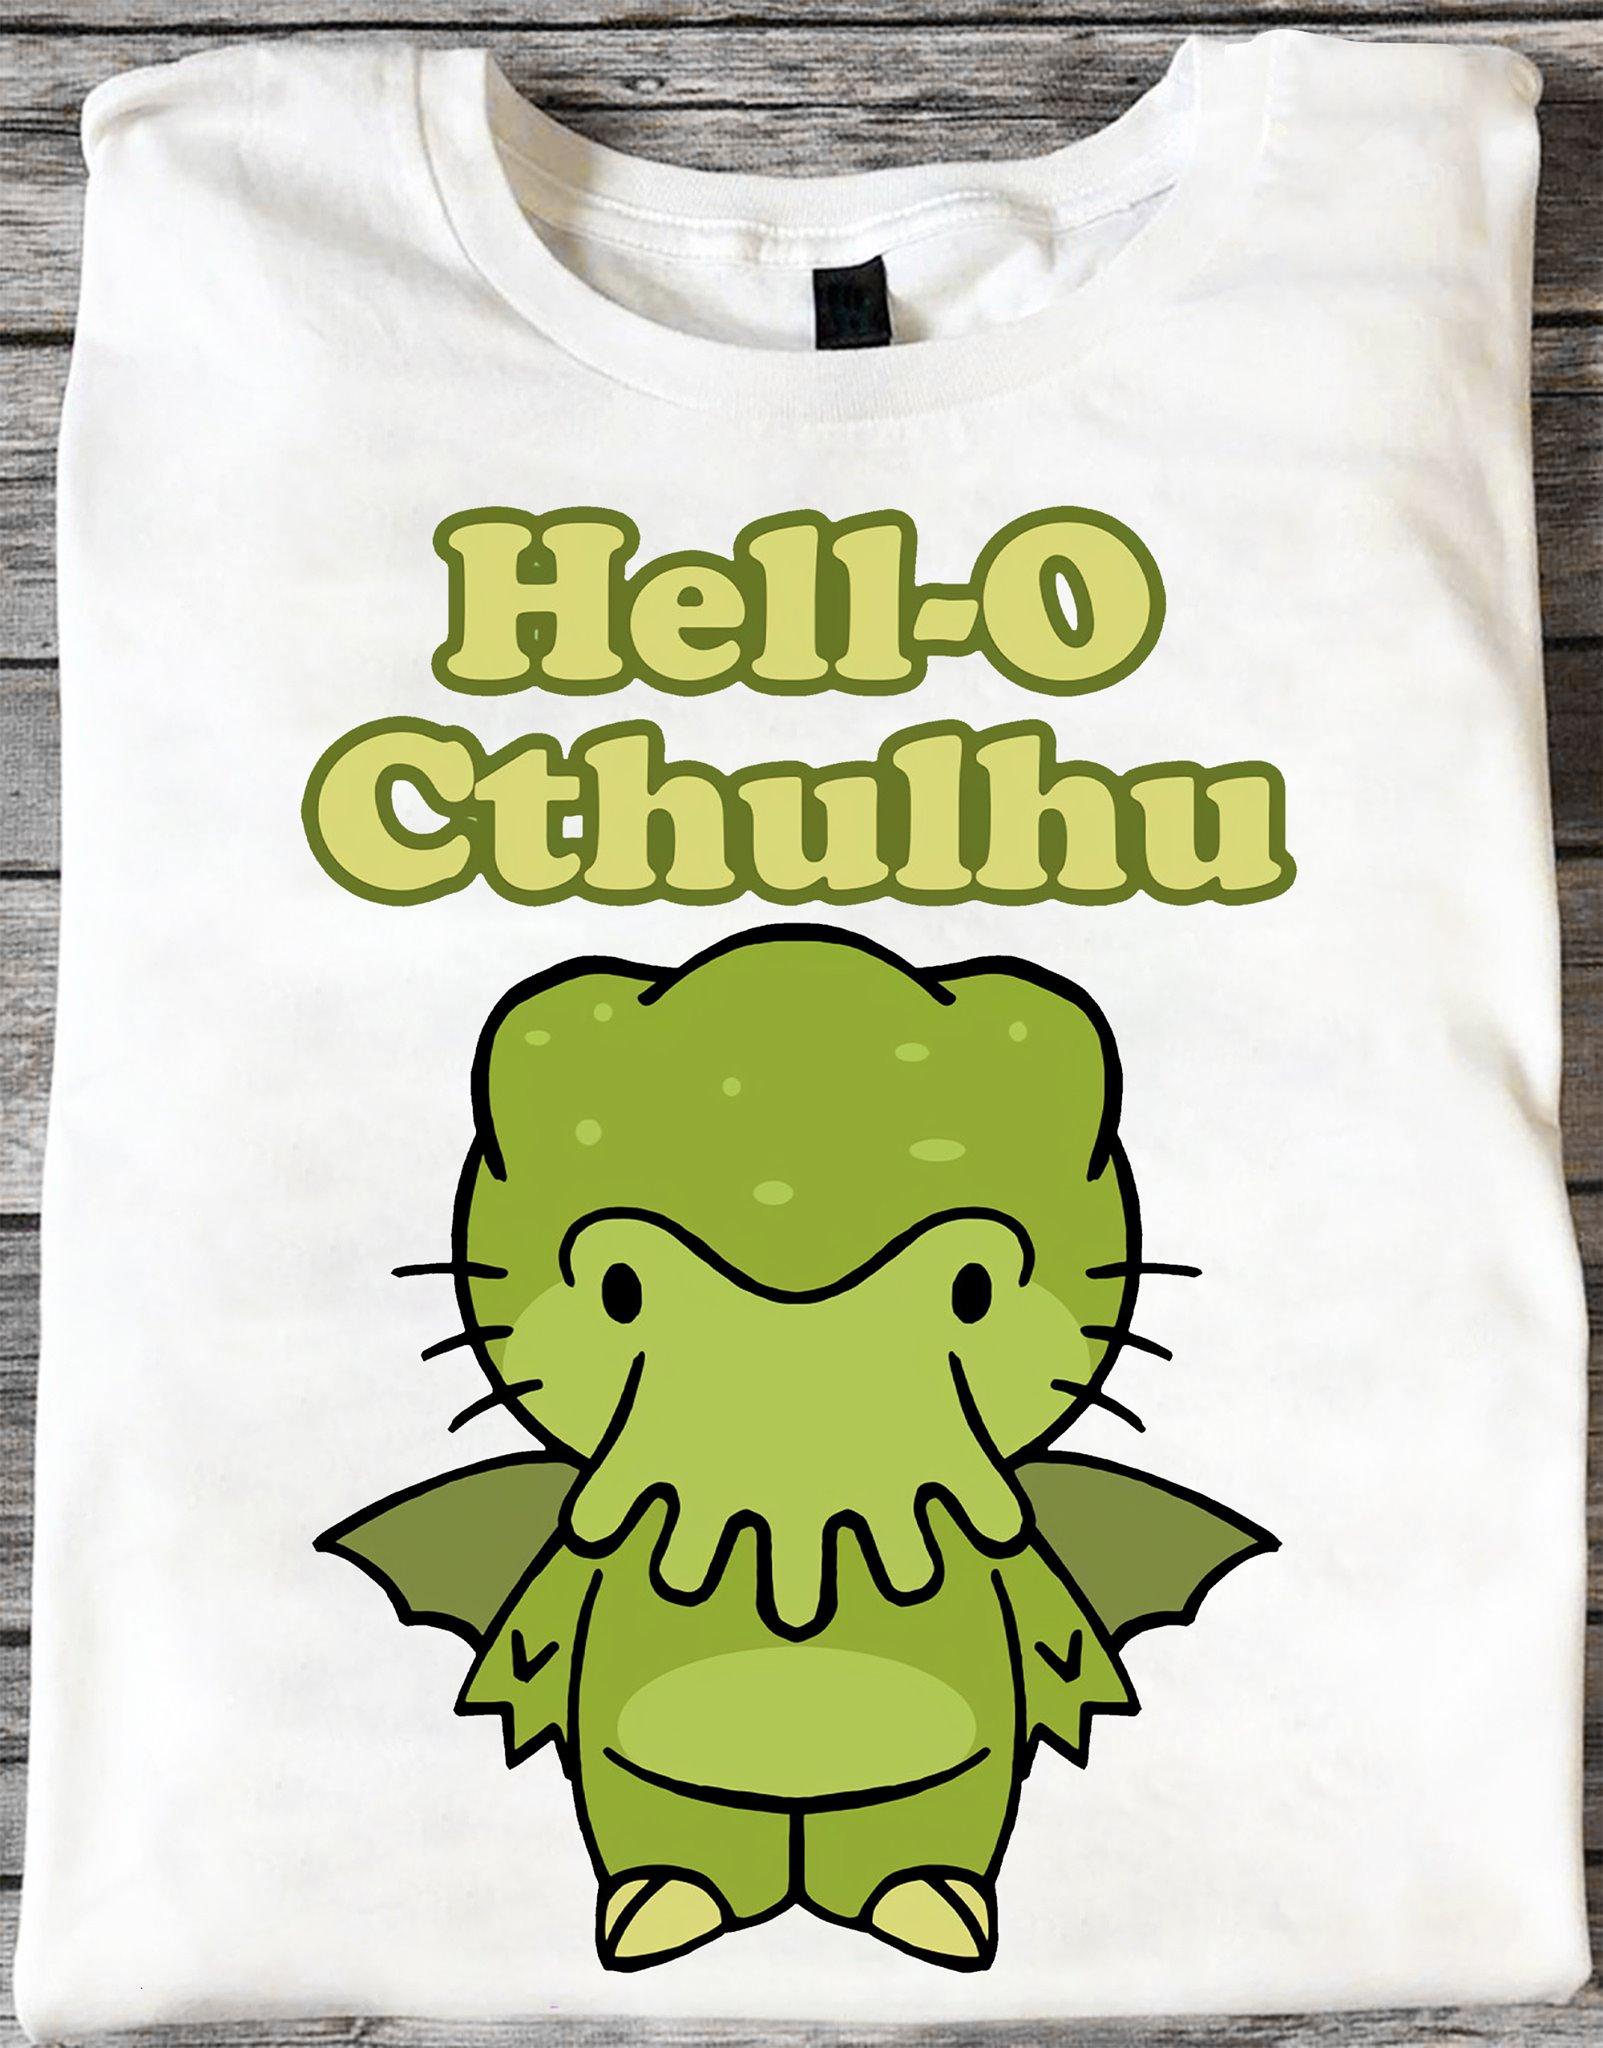 Hello Cthulhu - Hello Cthulhu webcomic, the misadventures of Cthulhu